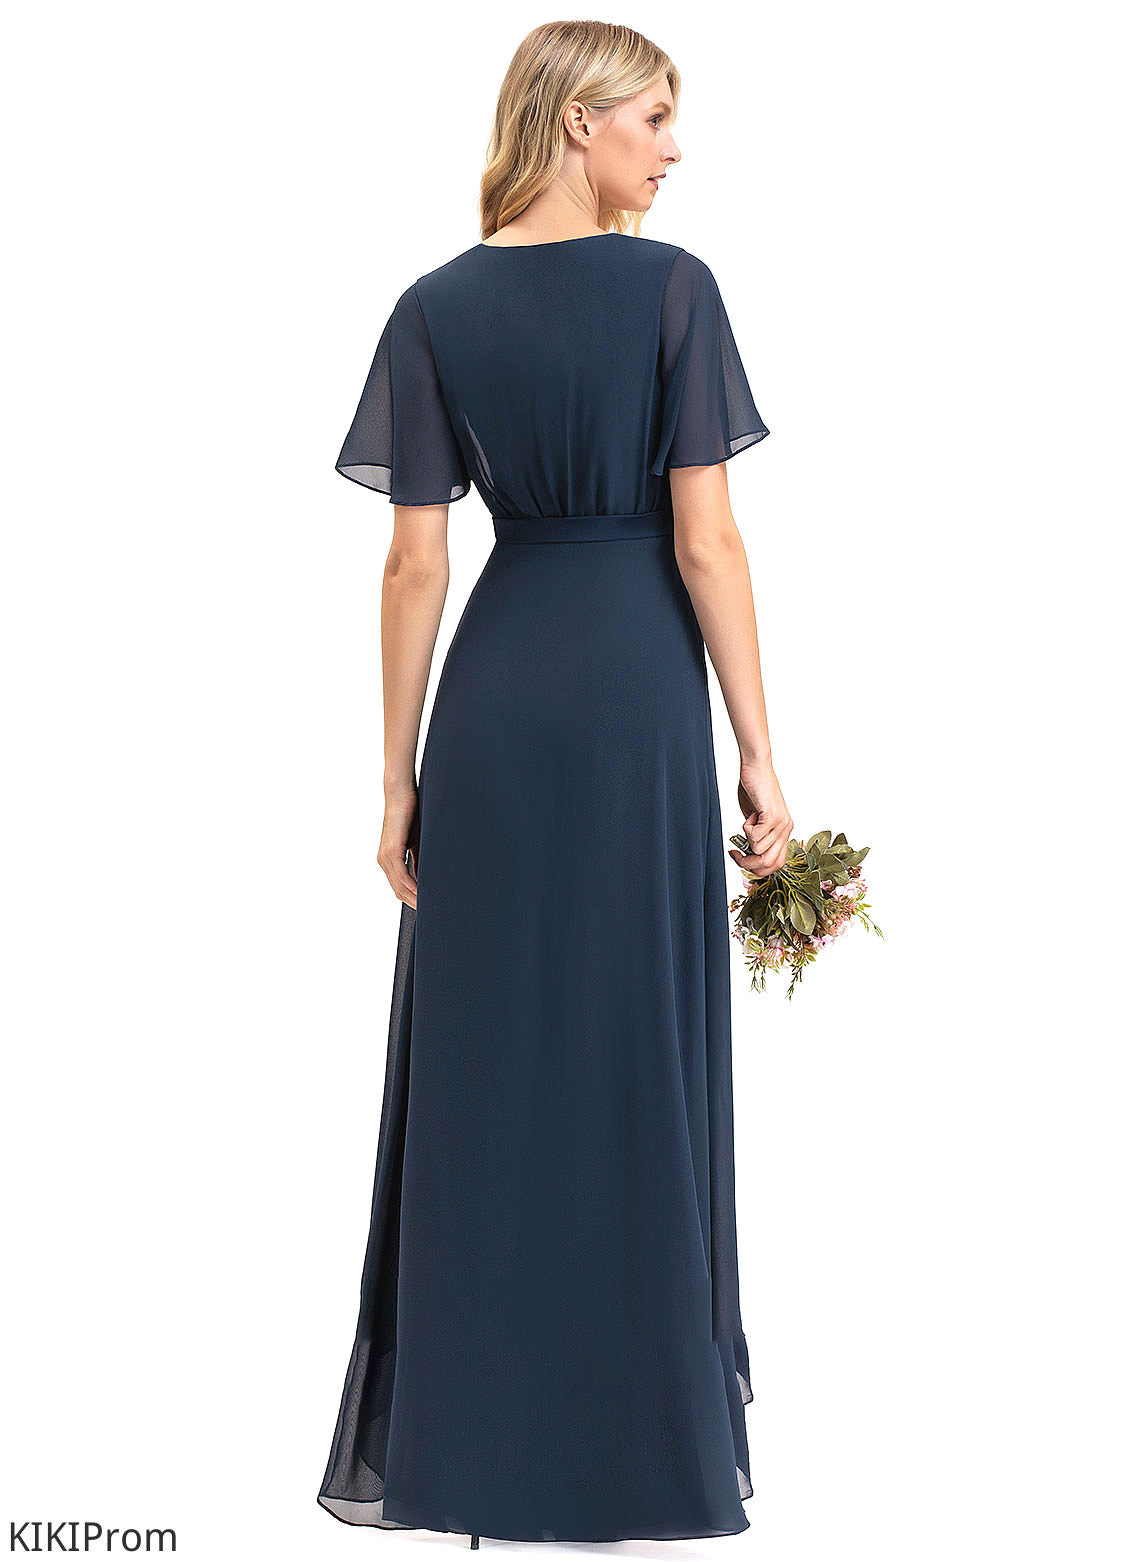 Silhouette Length Embellishment Asymmetrical Neckline V-neck A-Line Bow(s) Fabric Jordyn Scoop Sleeveless Bridesmaid Dresses